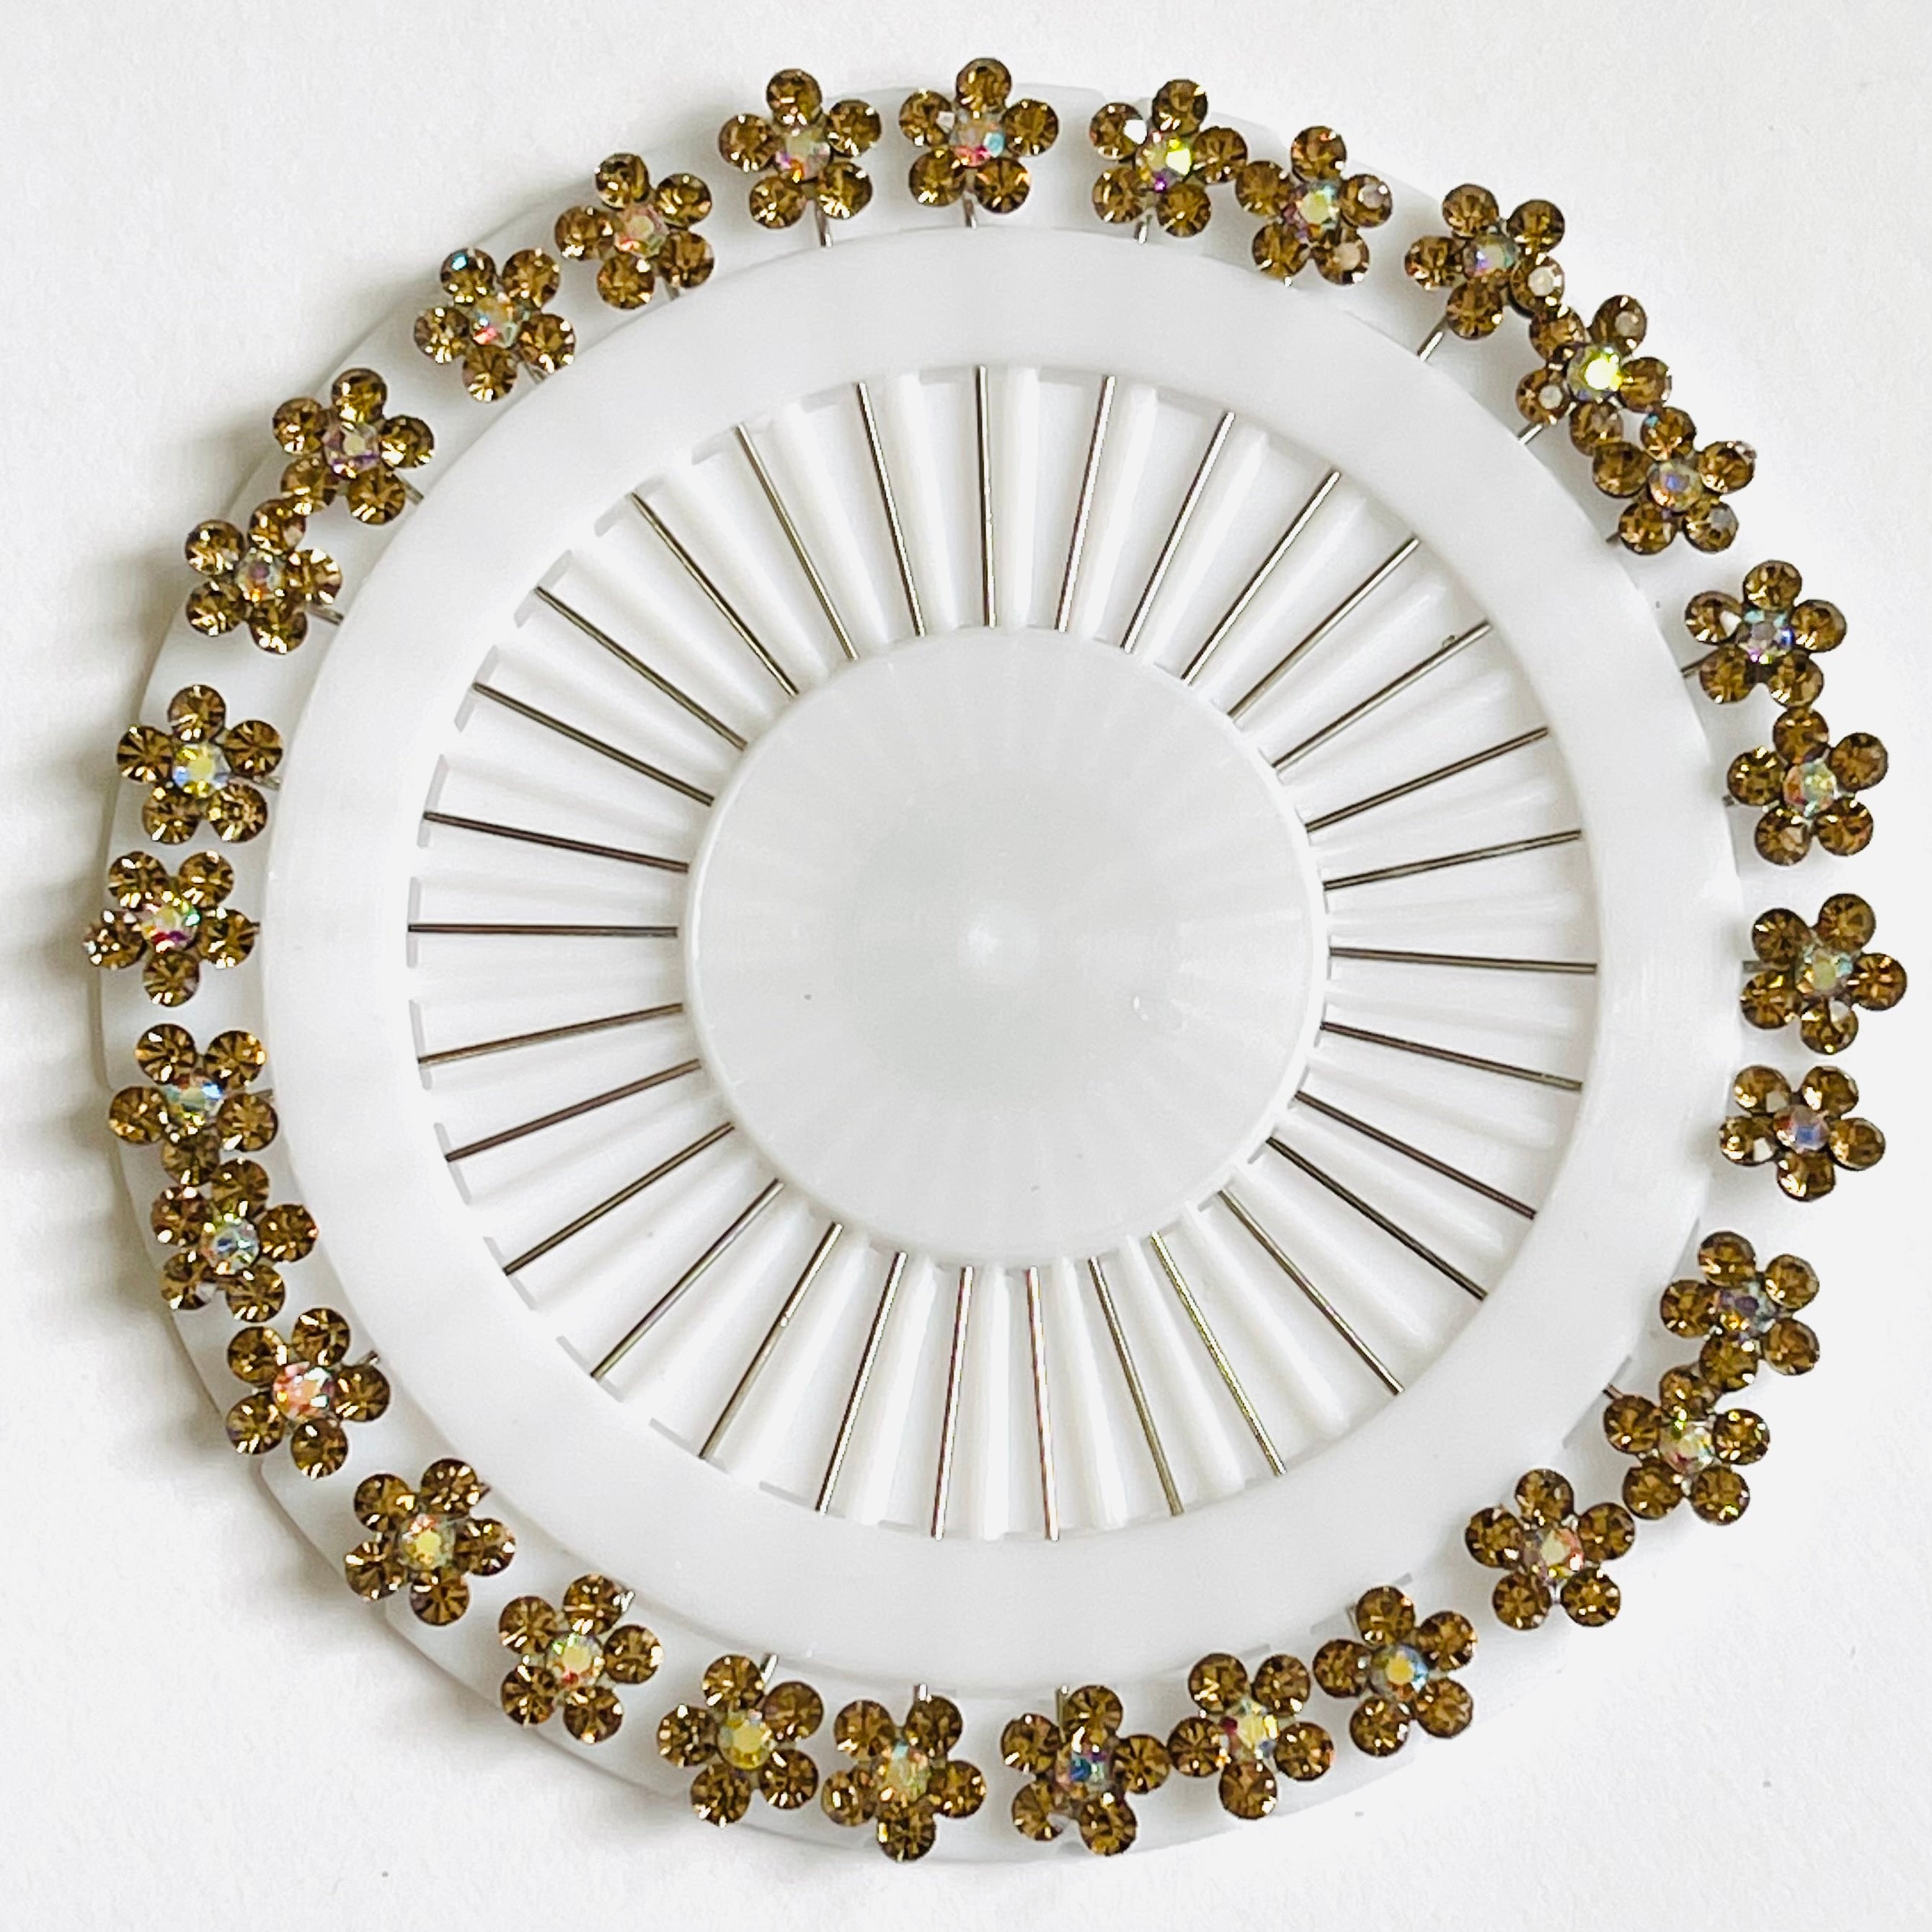 Set of 30 Gold Diamond Crystal Hijab Pins 4.5cm Long #25 - AL SHARIF STORE